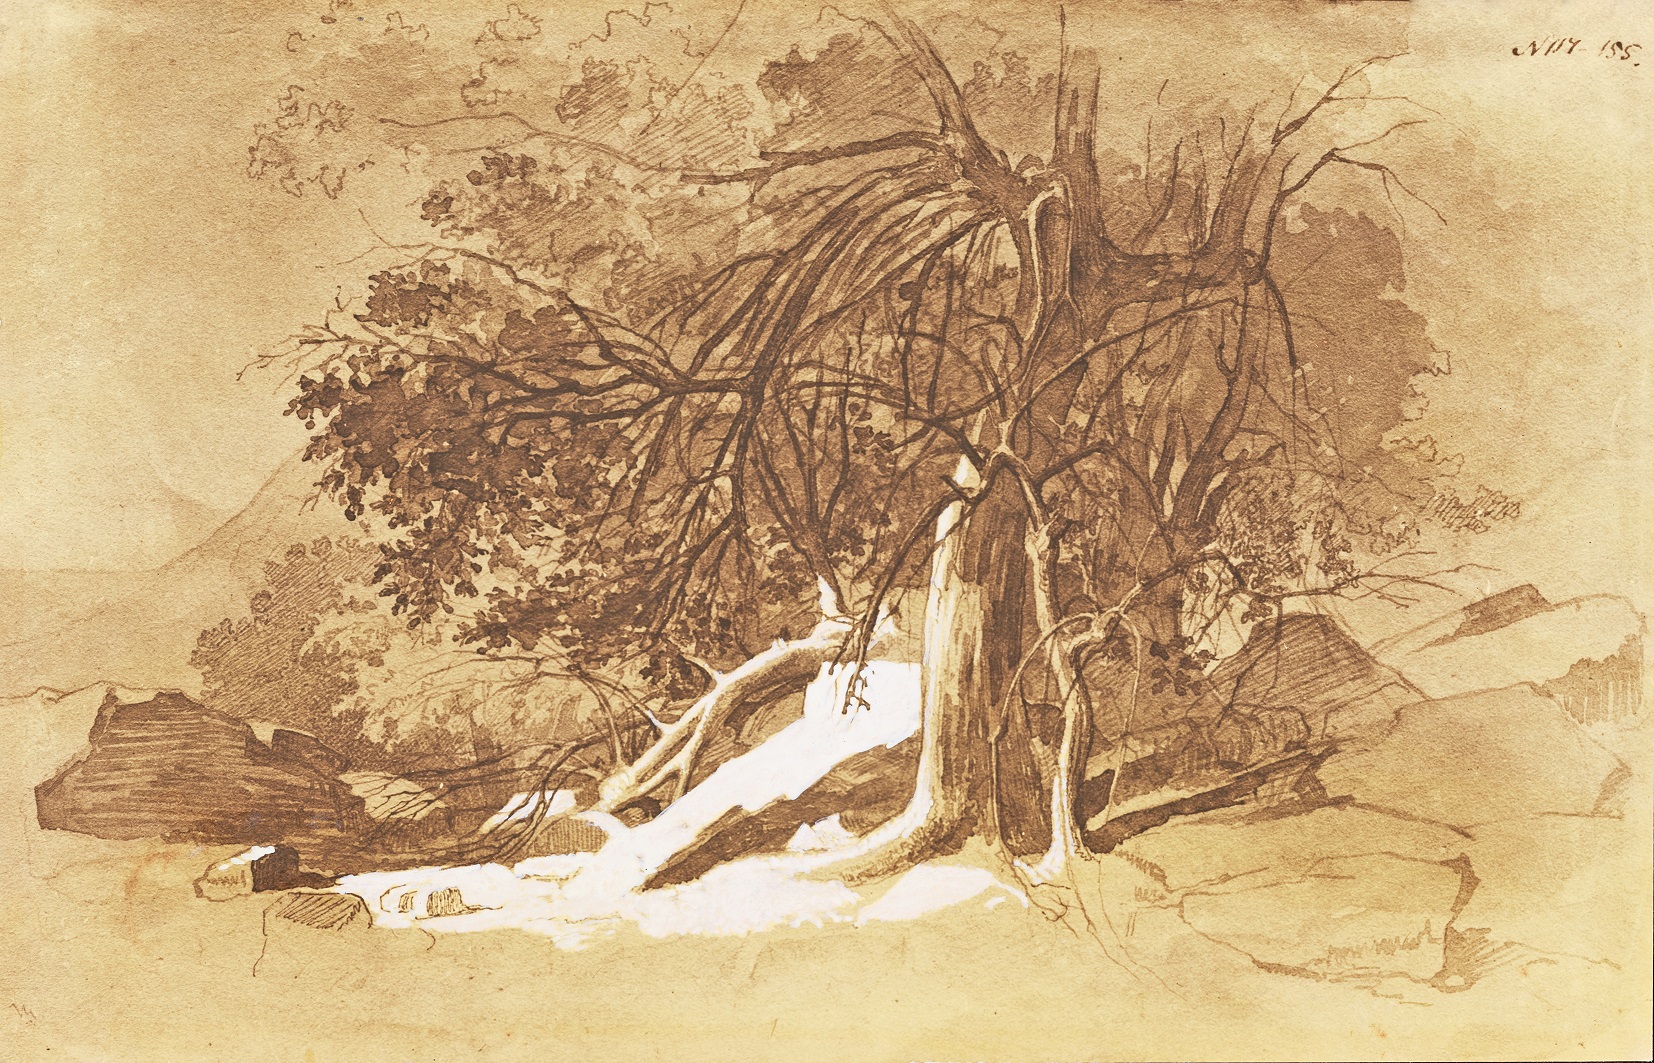 Mangyshlak Garden, 1851-52, sepia, ink, Chinese white